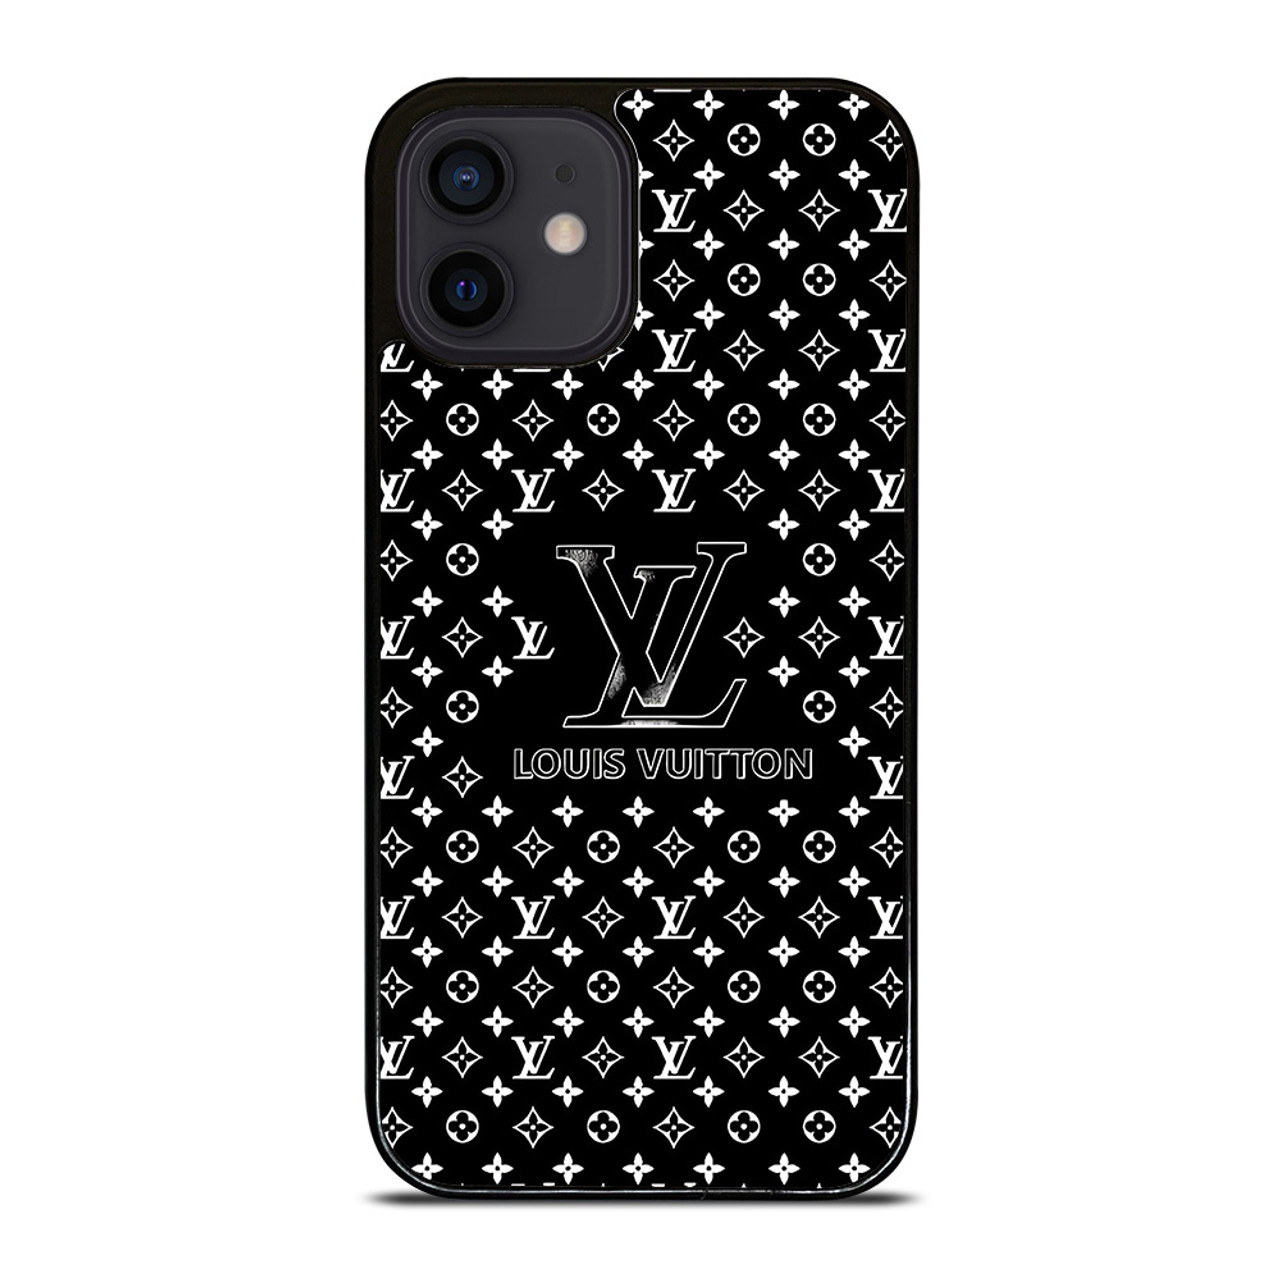 LOUIS VUITTON LV BLACK LOGO iPhone 12 Mini Case Cover